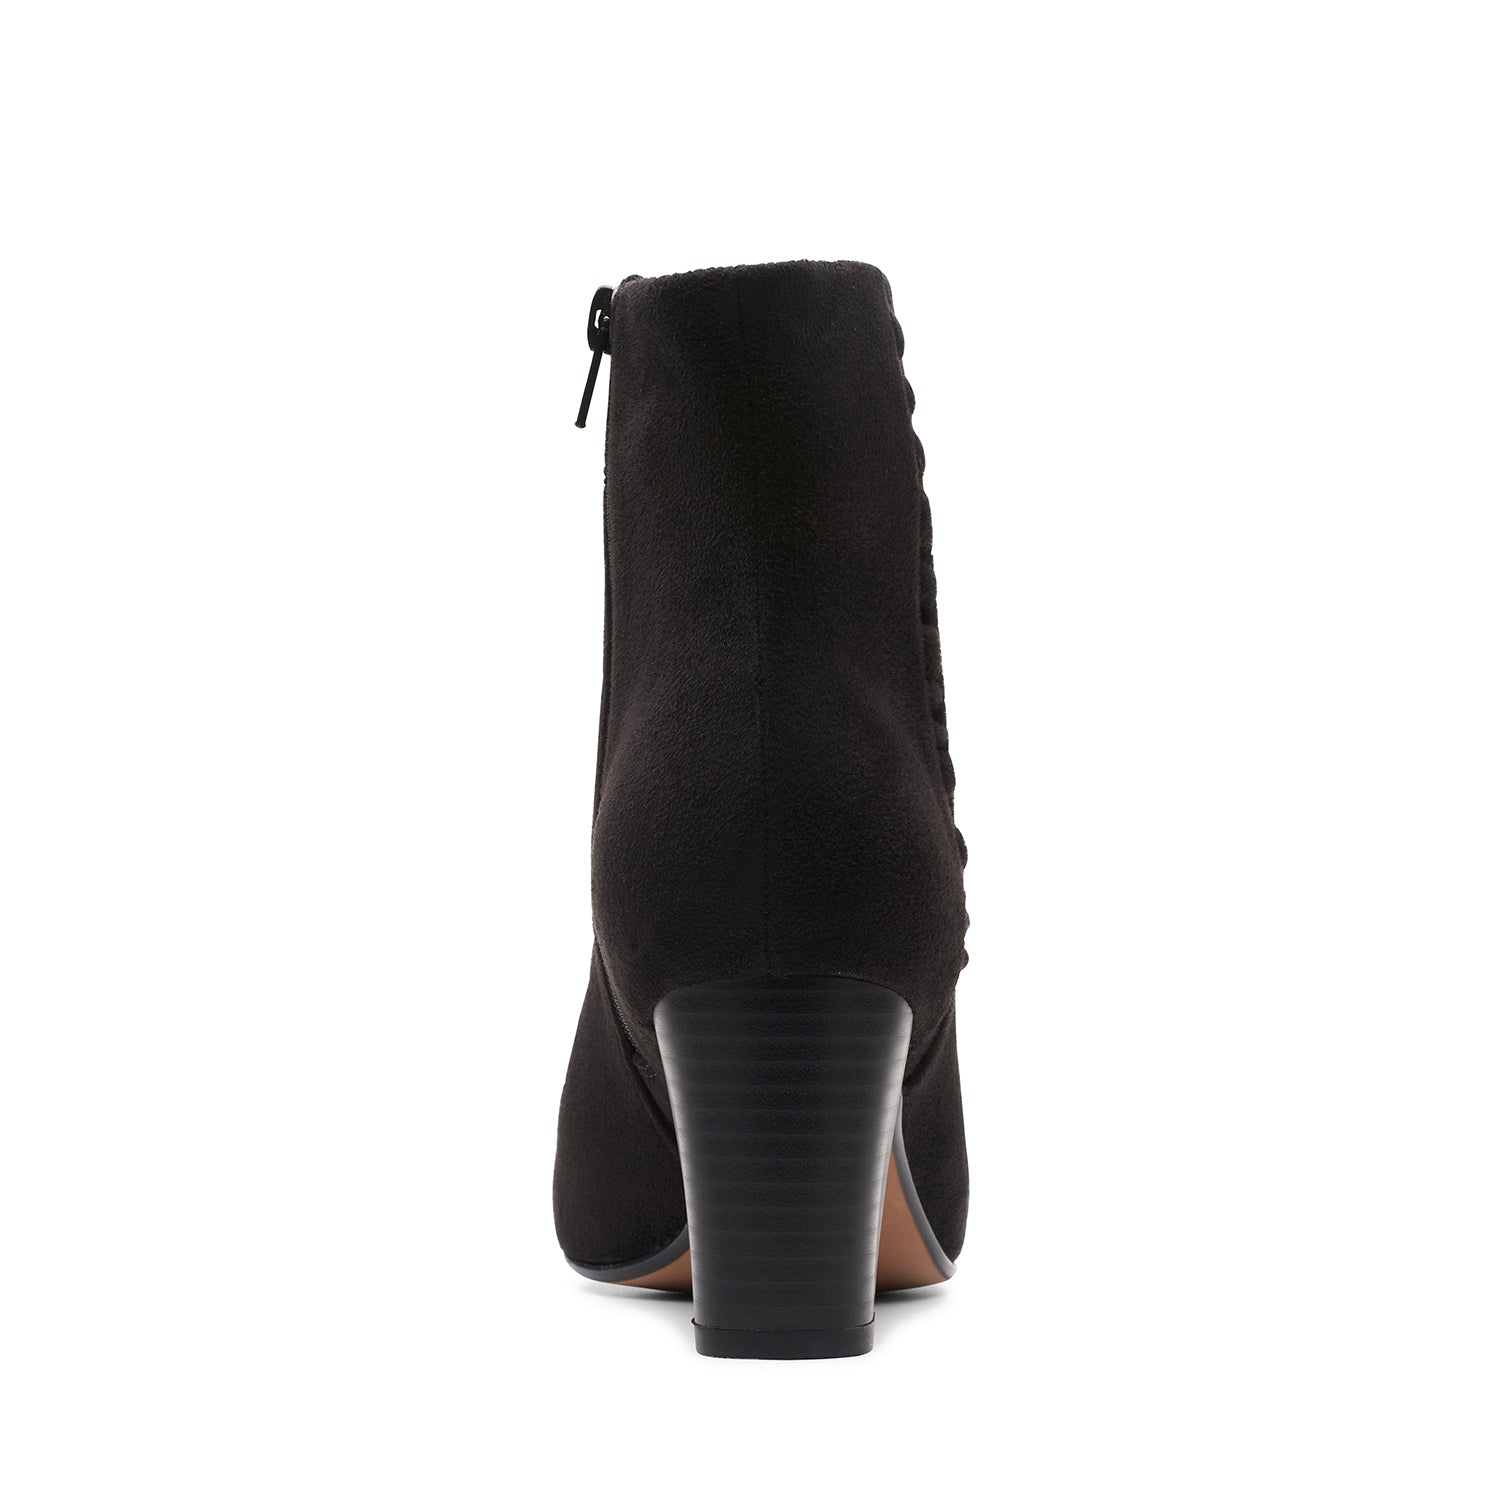 Clarks Aubrie Zip Boots - Black Synthetic - 261634024 - D Width (Standard Fit)